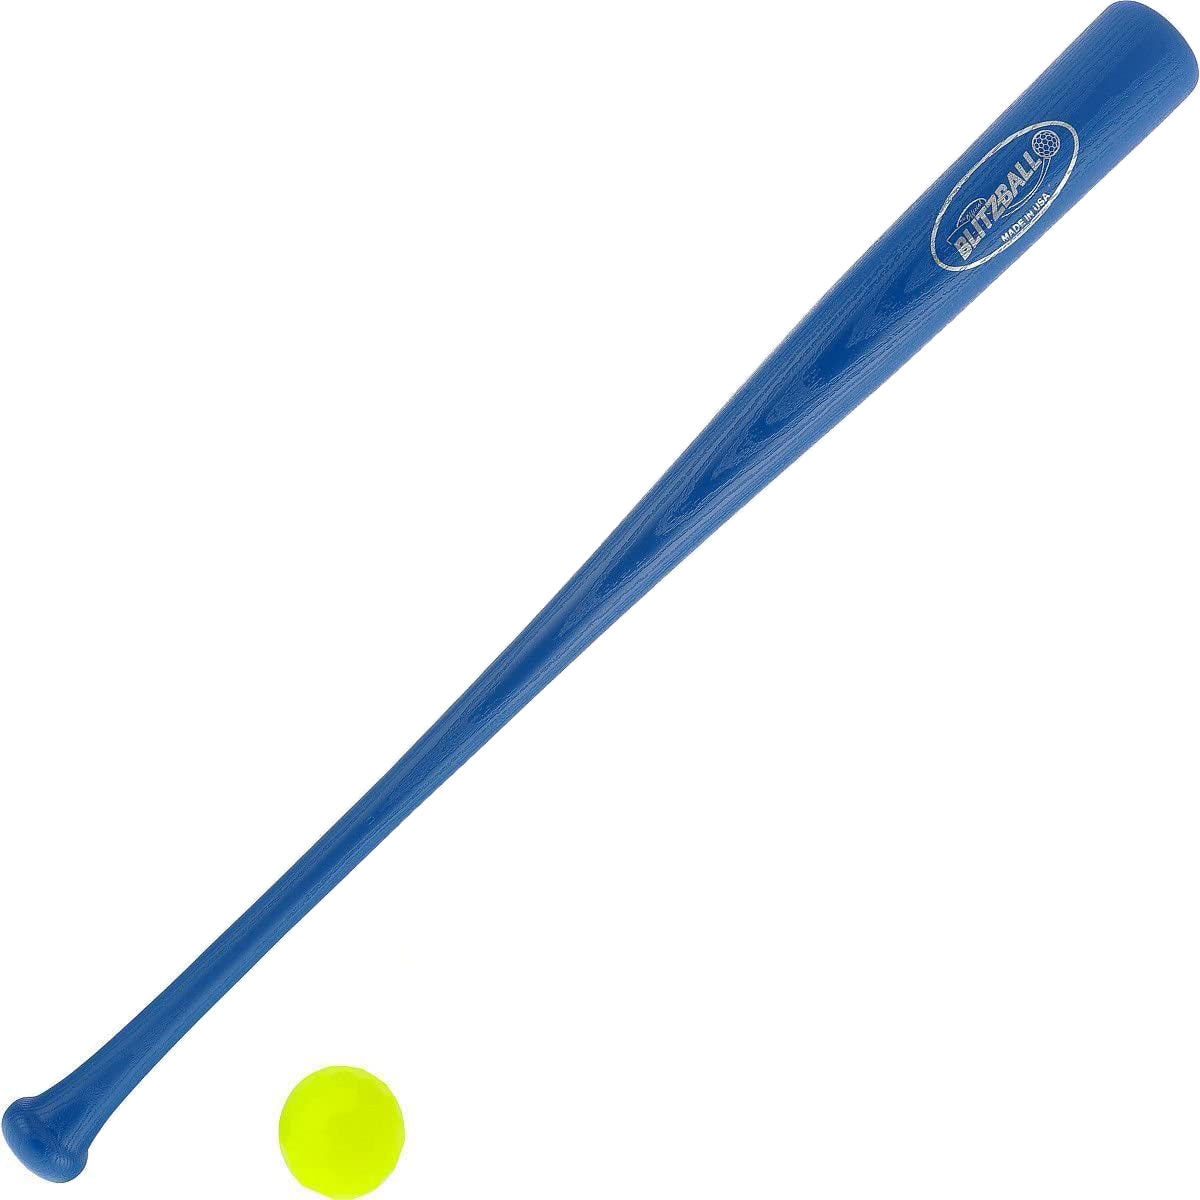 Blitzball "The Ultimate Backyard Baseball" Curve Training Plastic Ball & Bat Set Blitzball